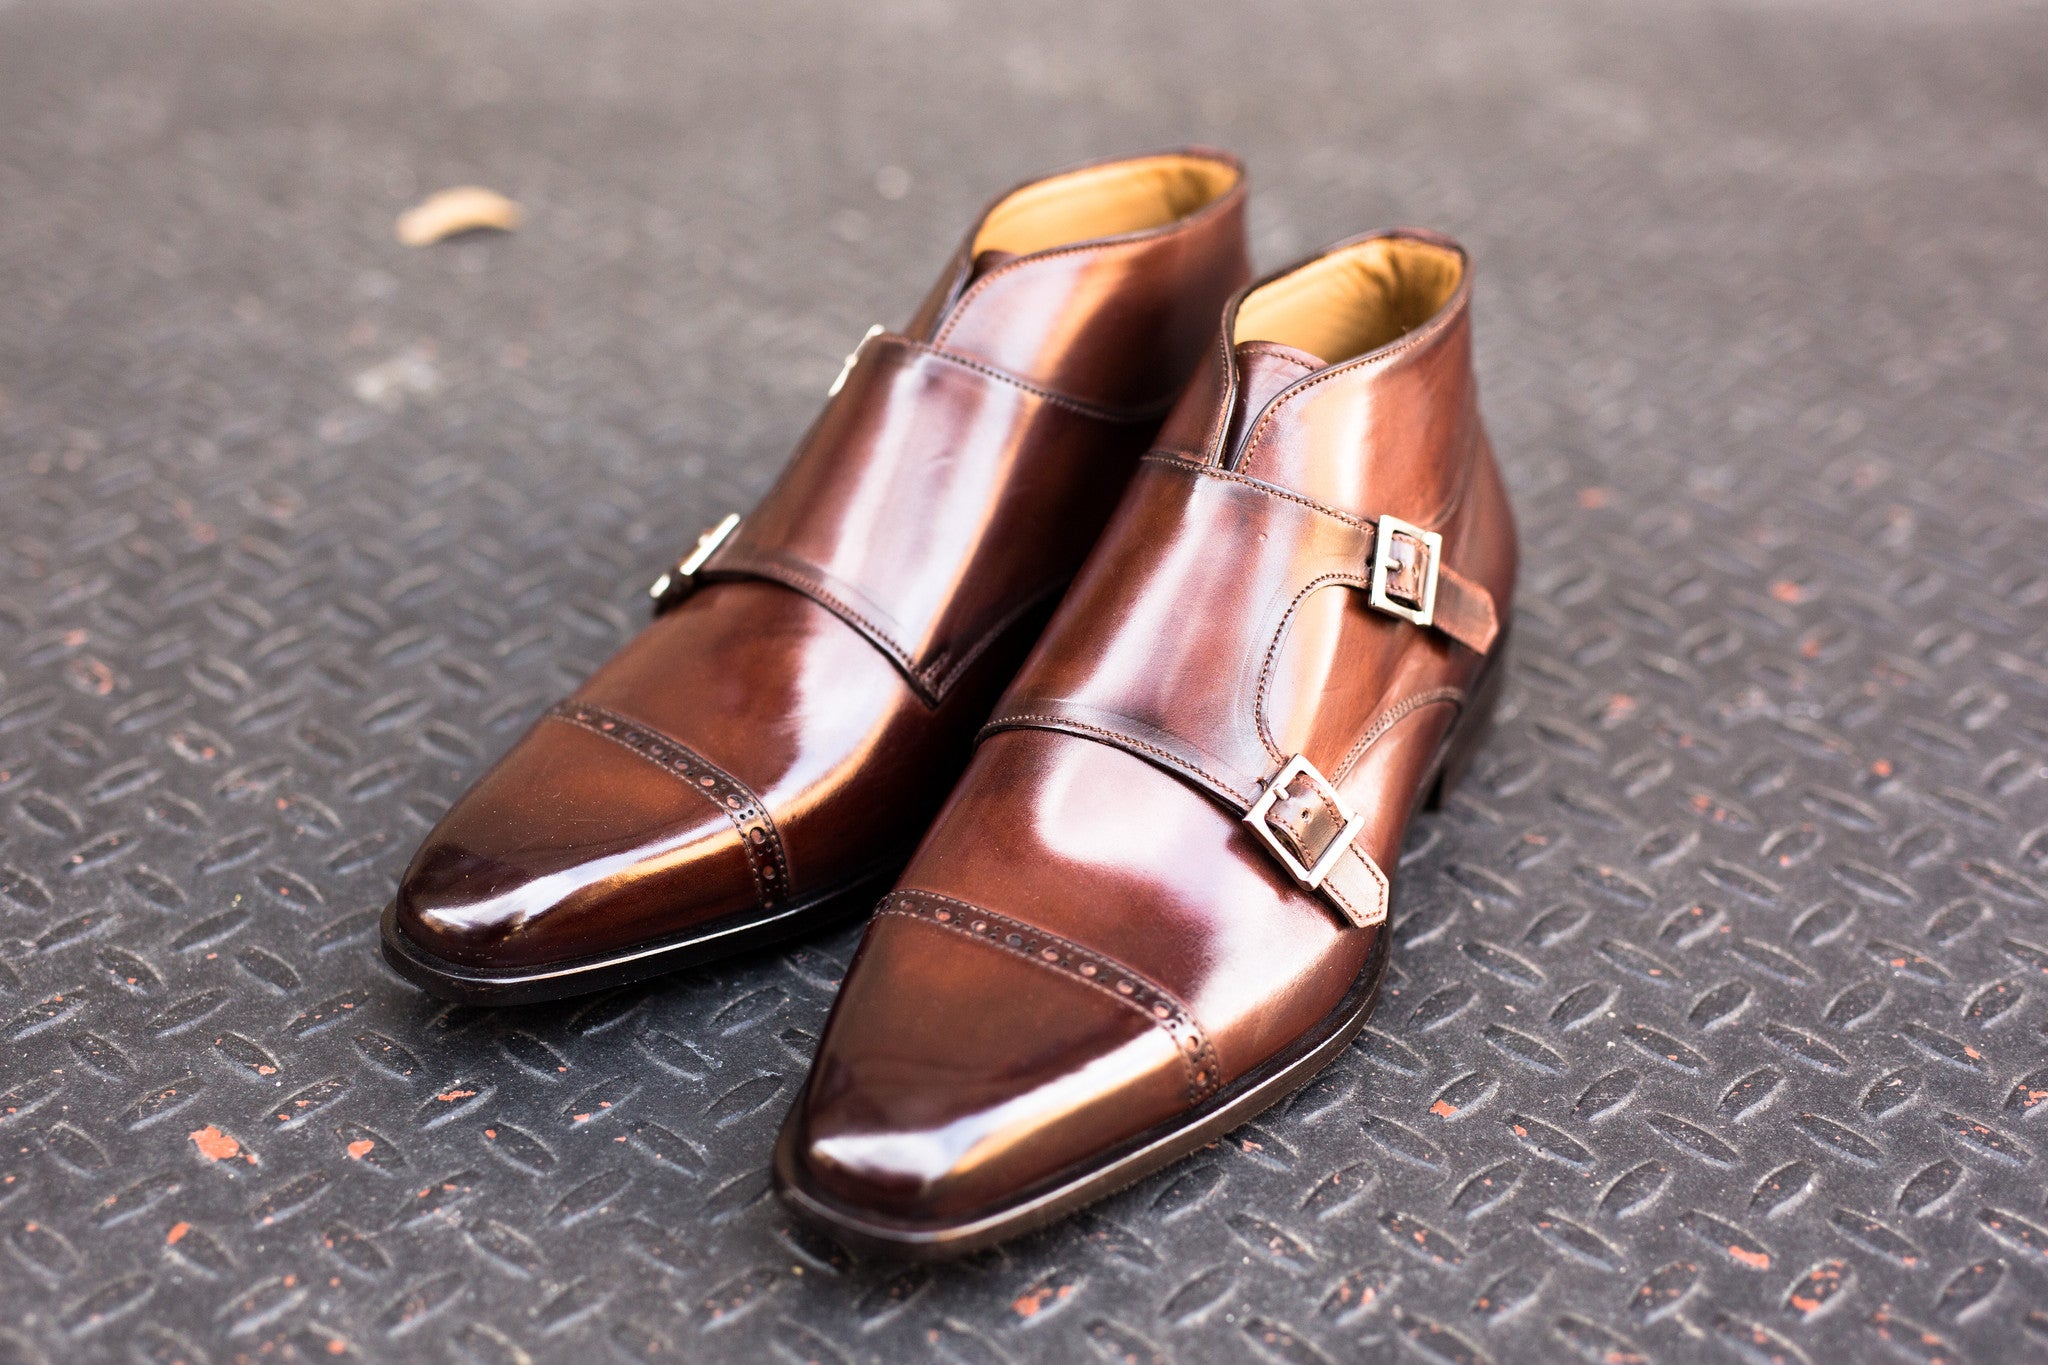 Paul Evans Handmade Italian Leather Men's Dress Shoes - The Heston Double Monk Strap Boot - Chocolate